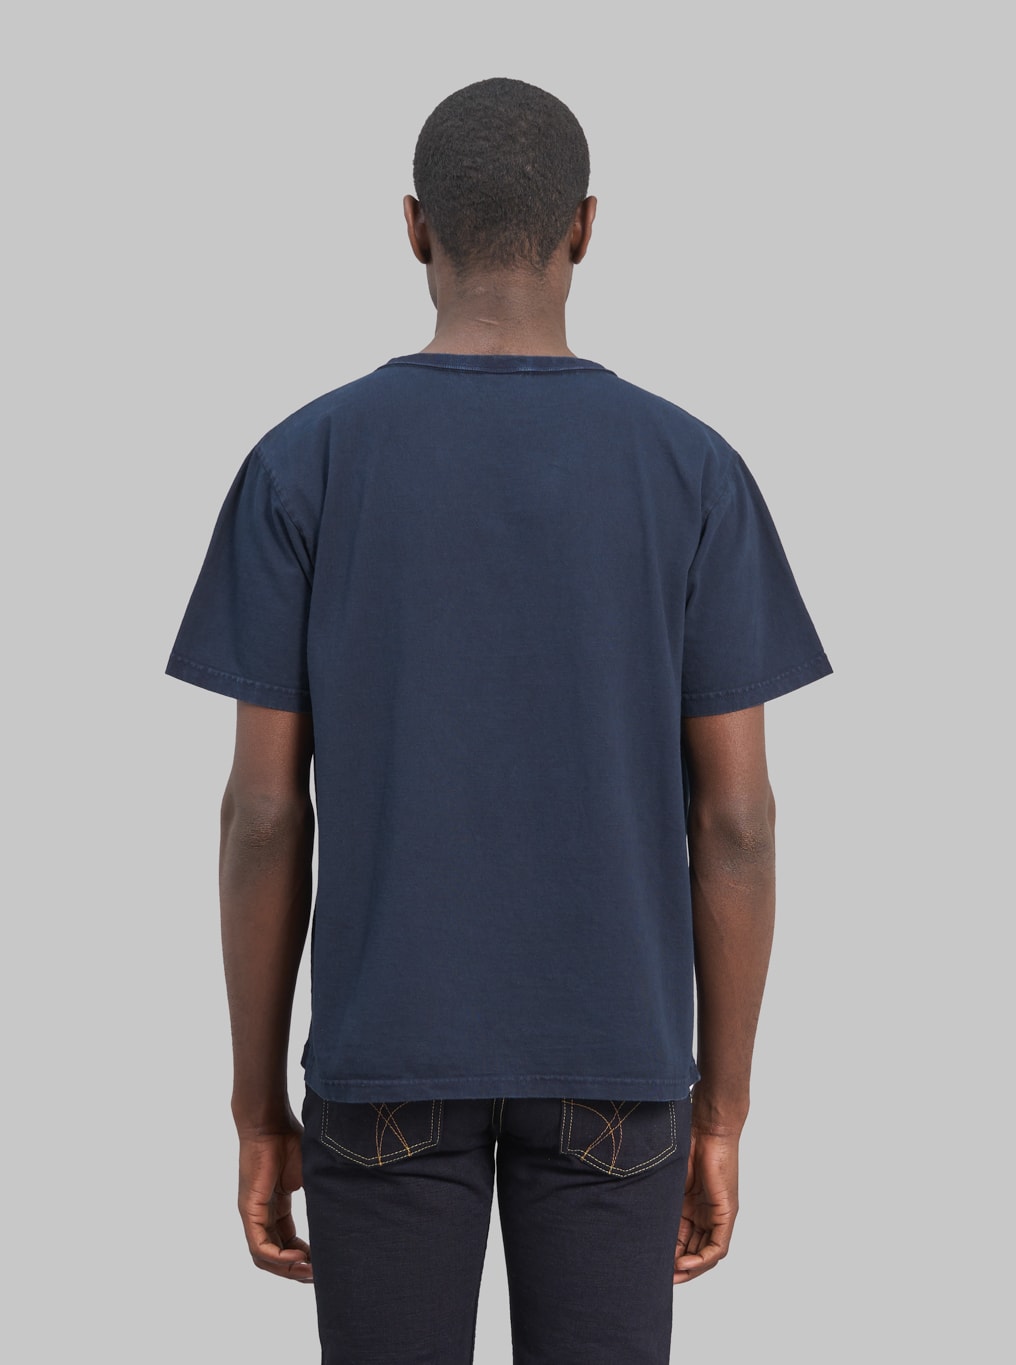 Studio D'Artisan 8136B USA Cotton T-Shirt Dark Indigo